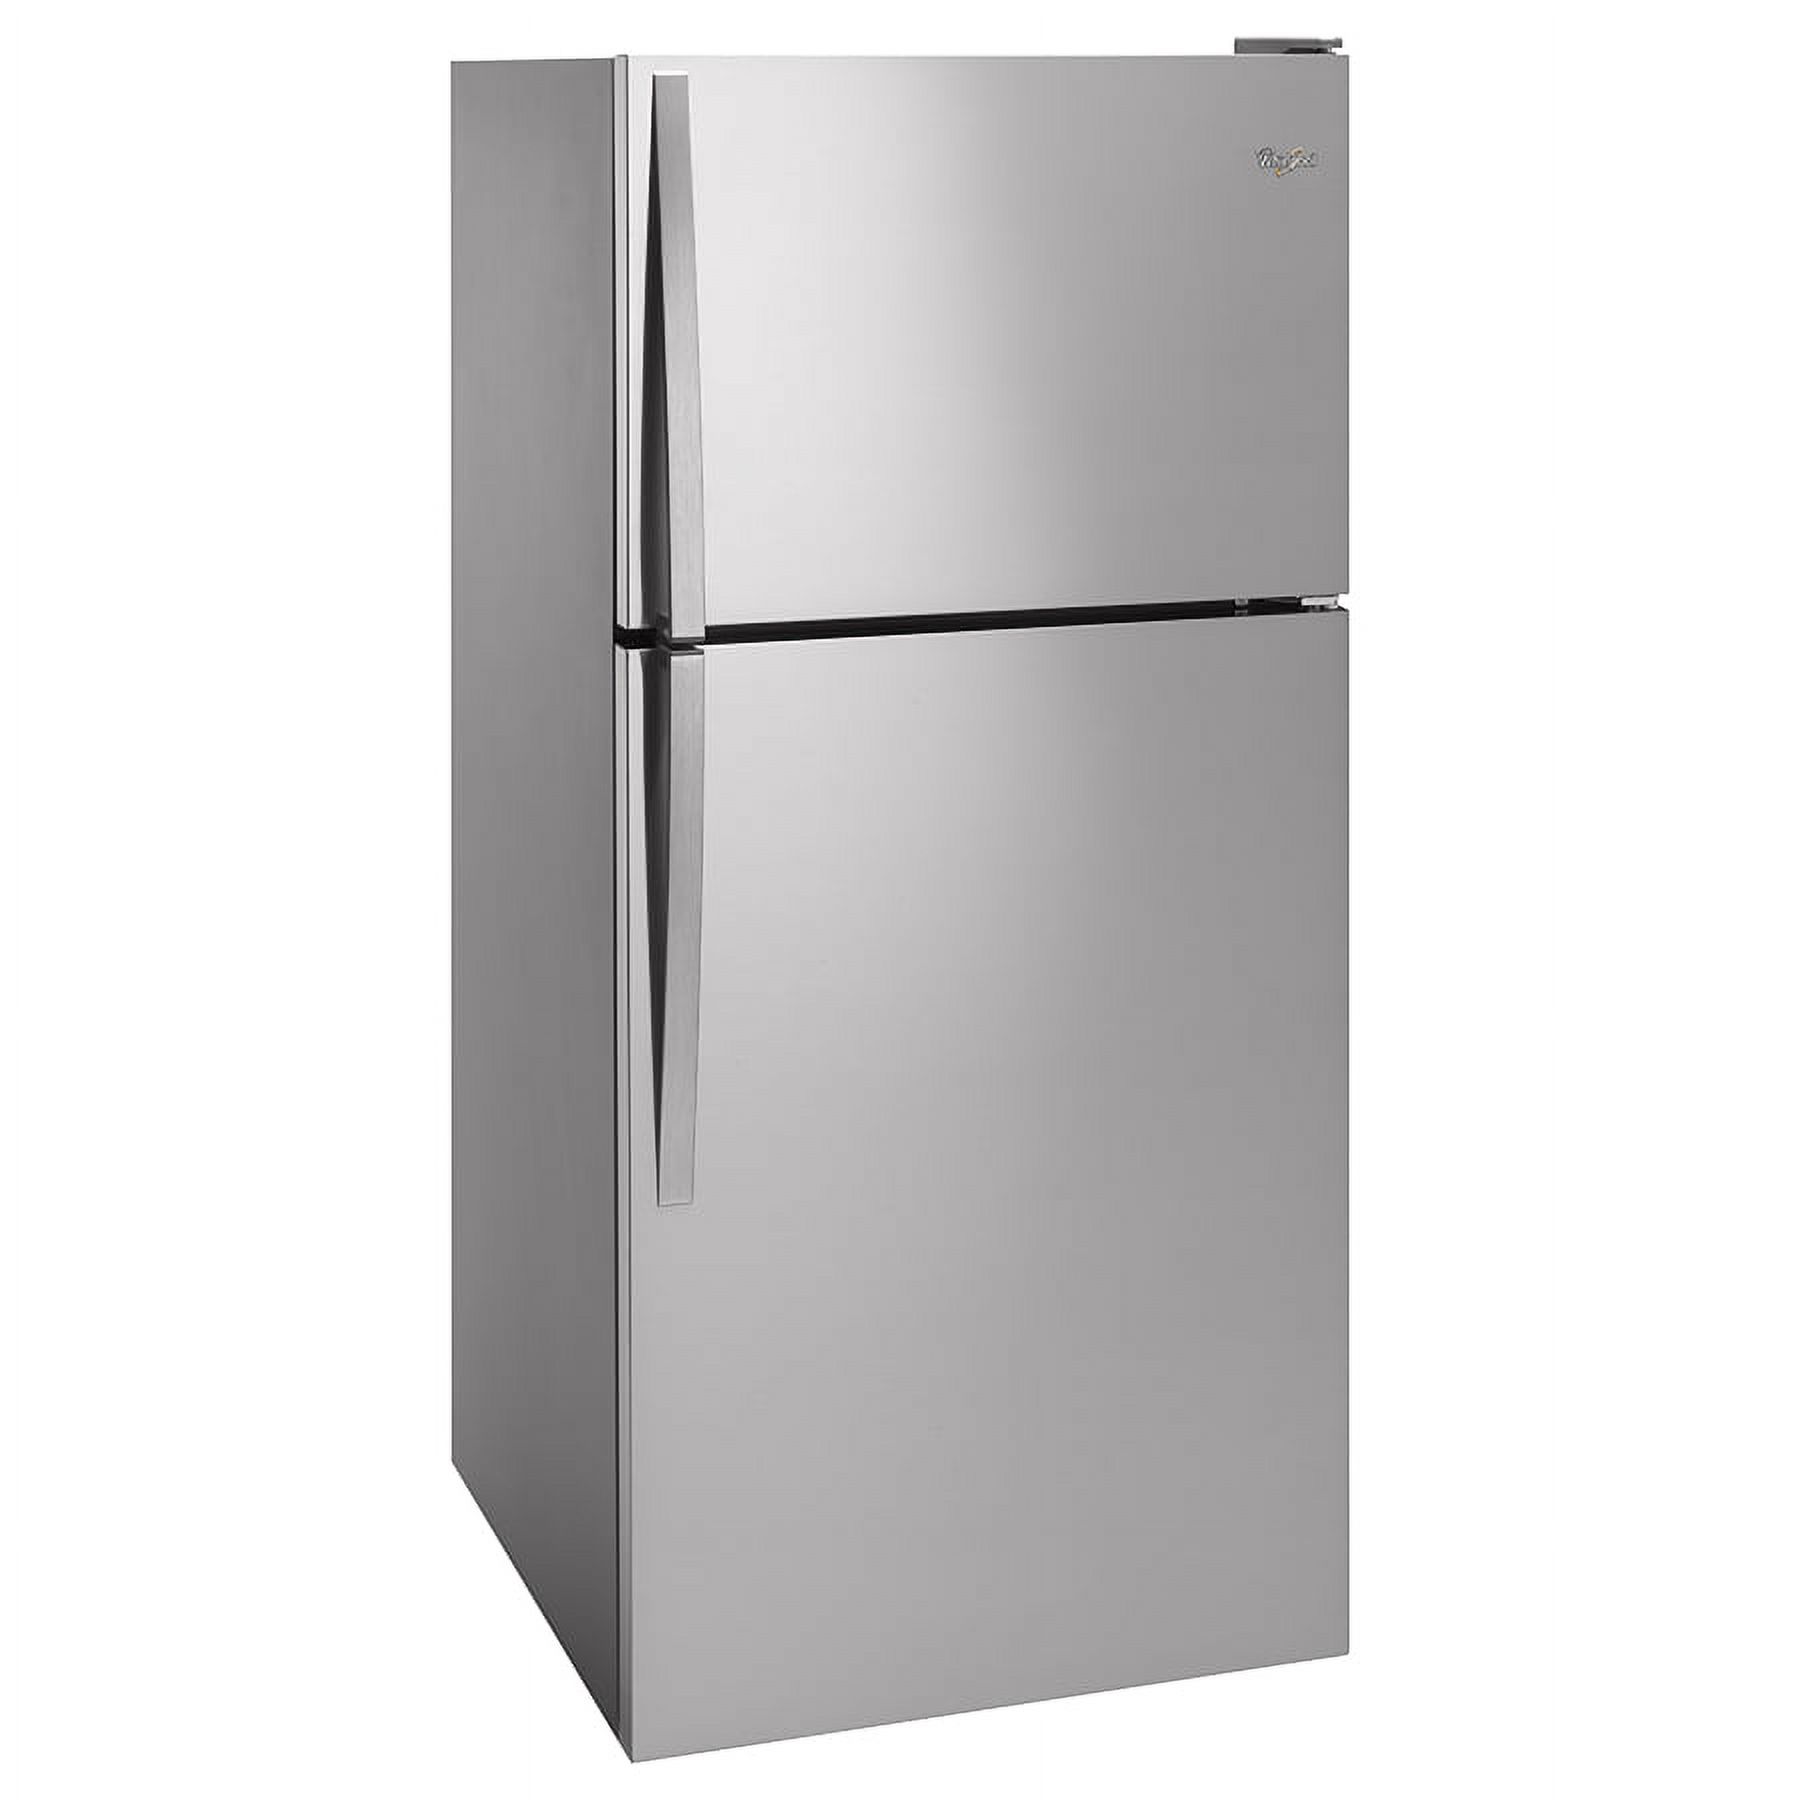 Whirlpool® WRT318FZDM: 30-inch Wide Top Freezer Refrigerator - 18 cu. ft - Stainless Steel. - image 2 of 8